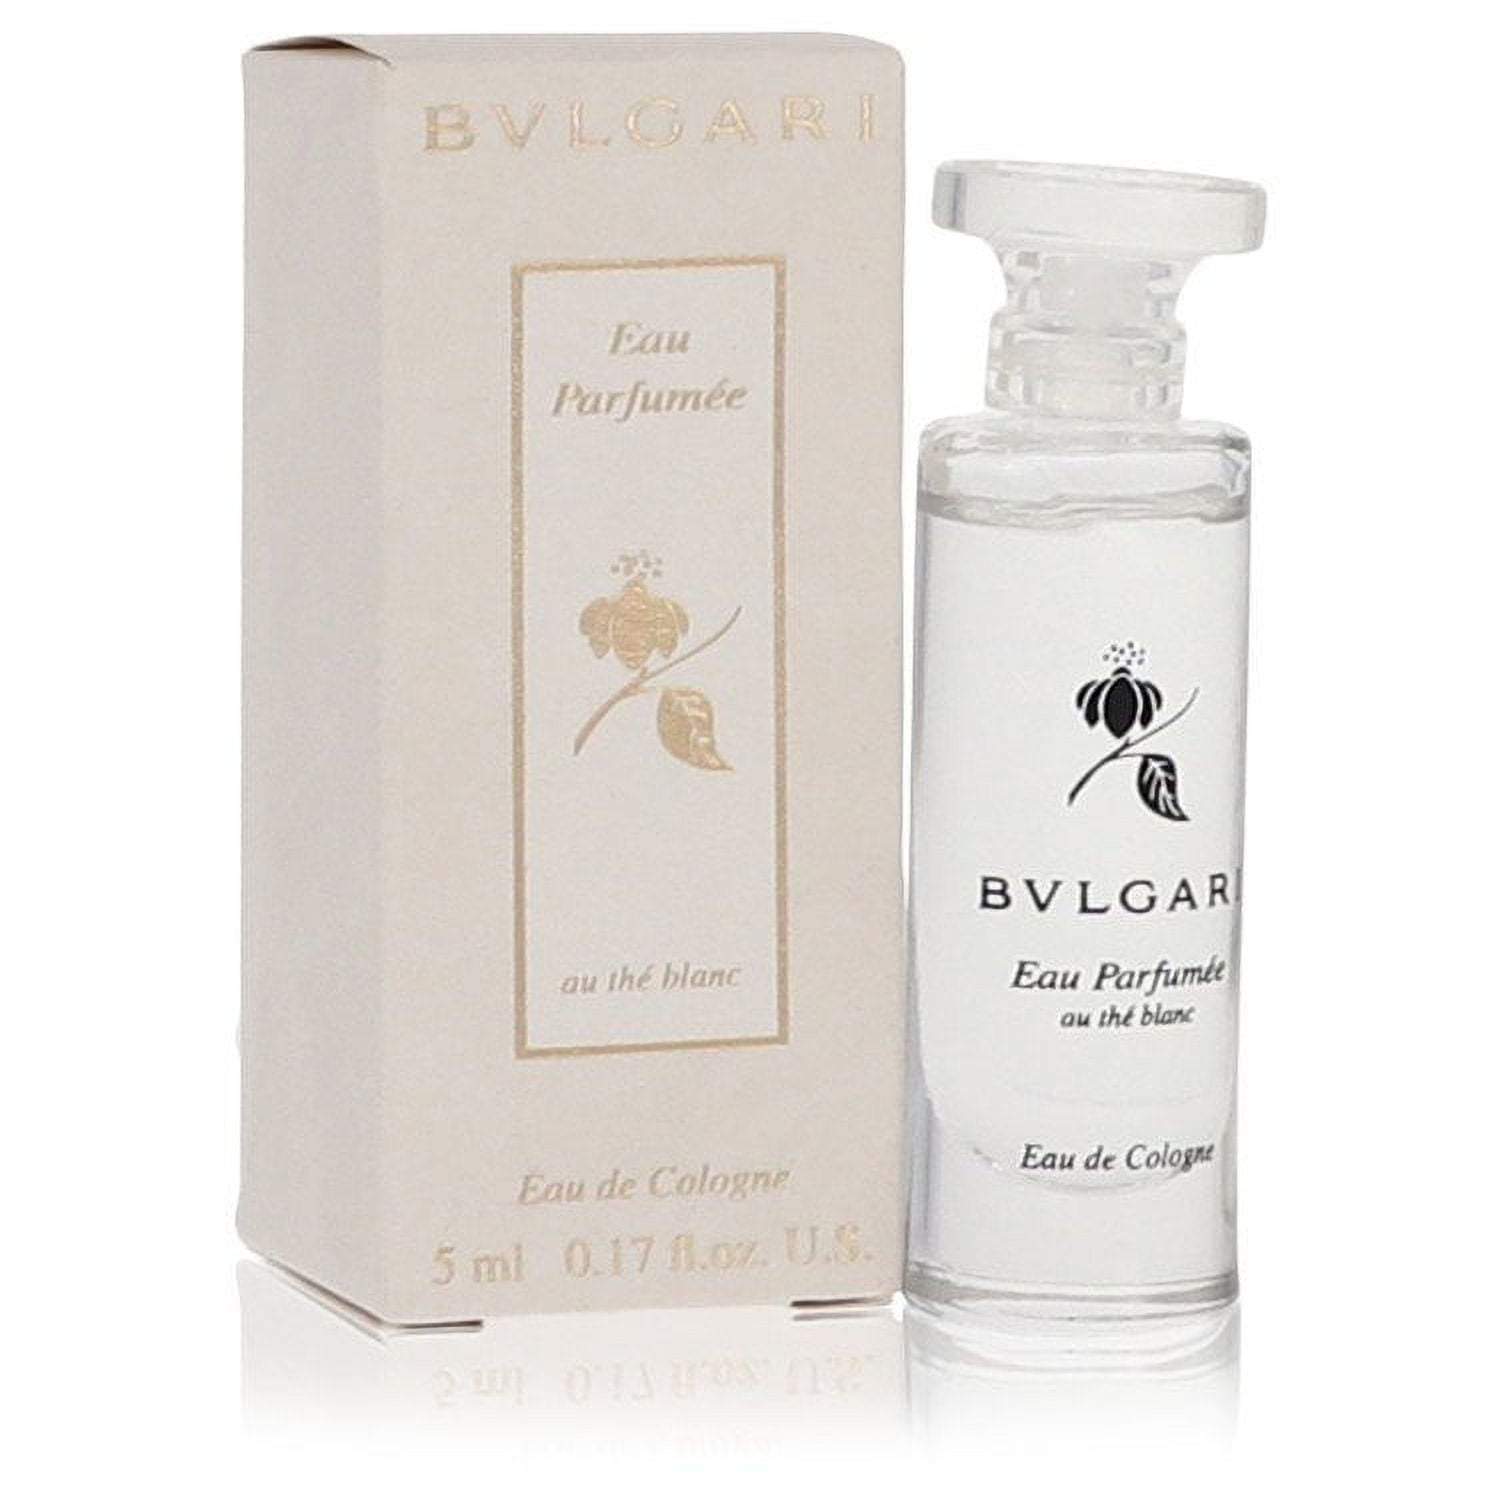 BVLGARI Eau Parfumee au the blanc Eau de Cologne Spray Reviews 2023